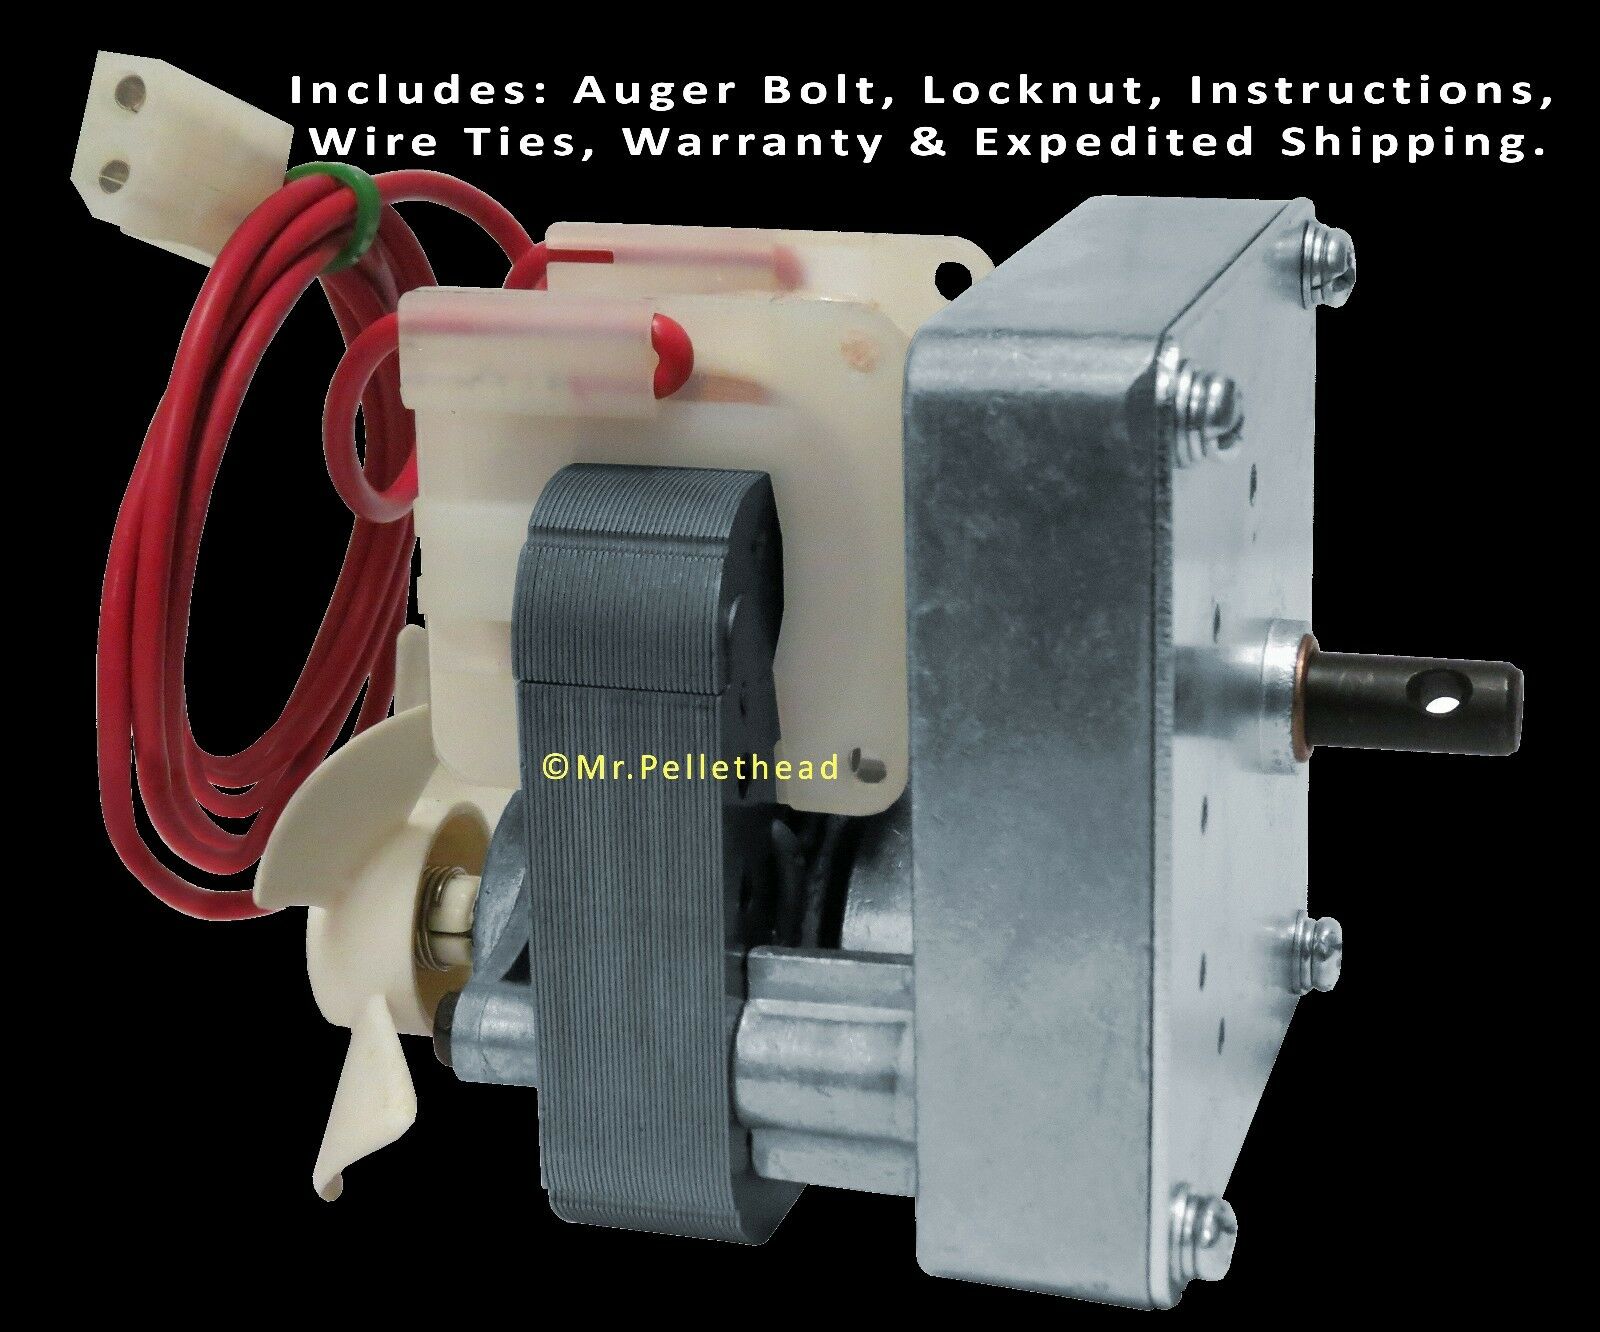 Traeger Auger Motor Upgrade [xp7252] For Wood Pellet Smoker Grill Kit0020 Brn100